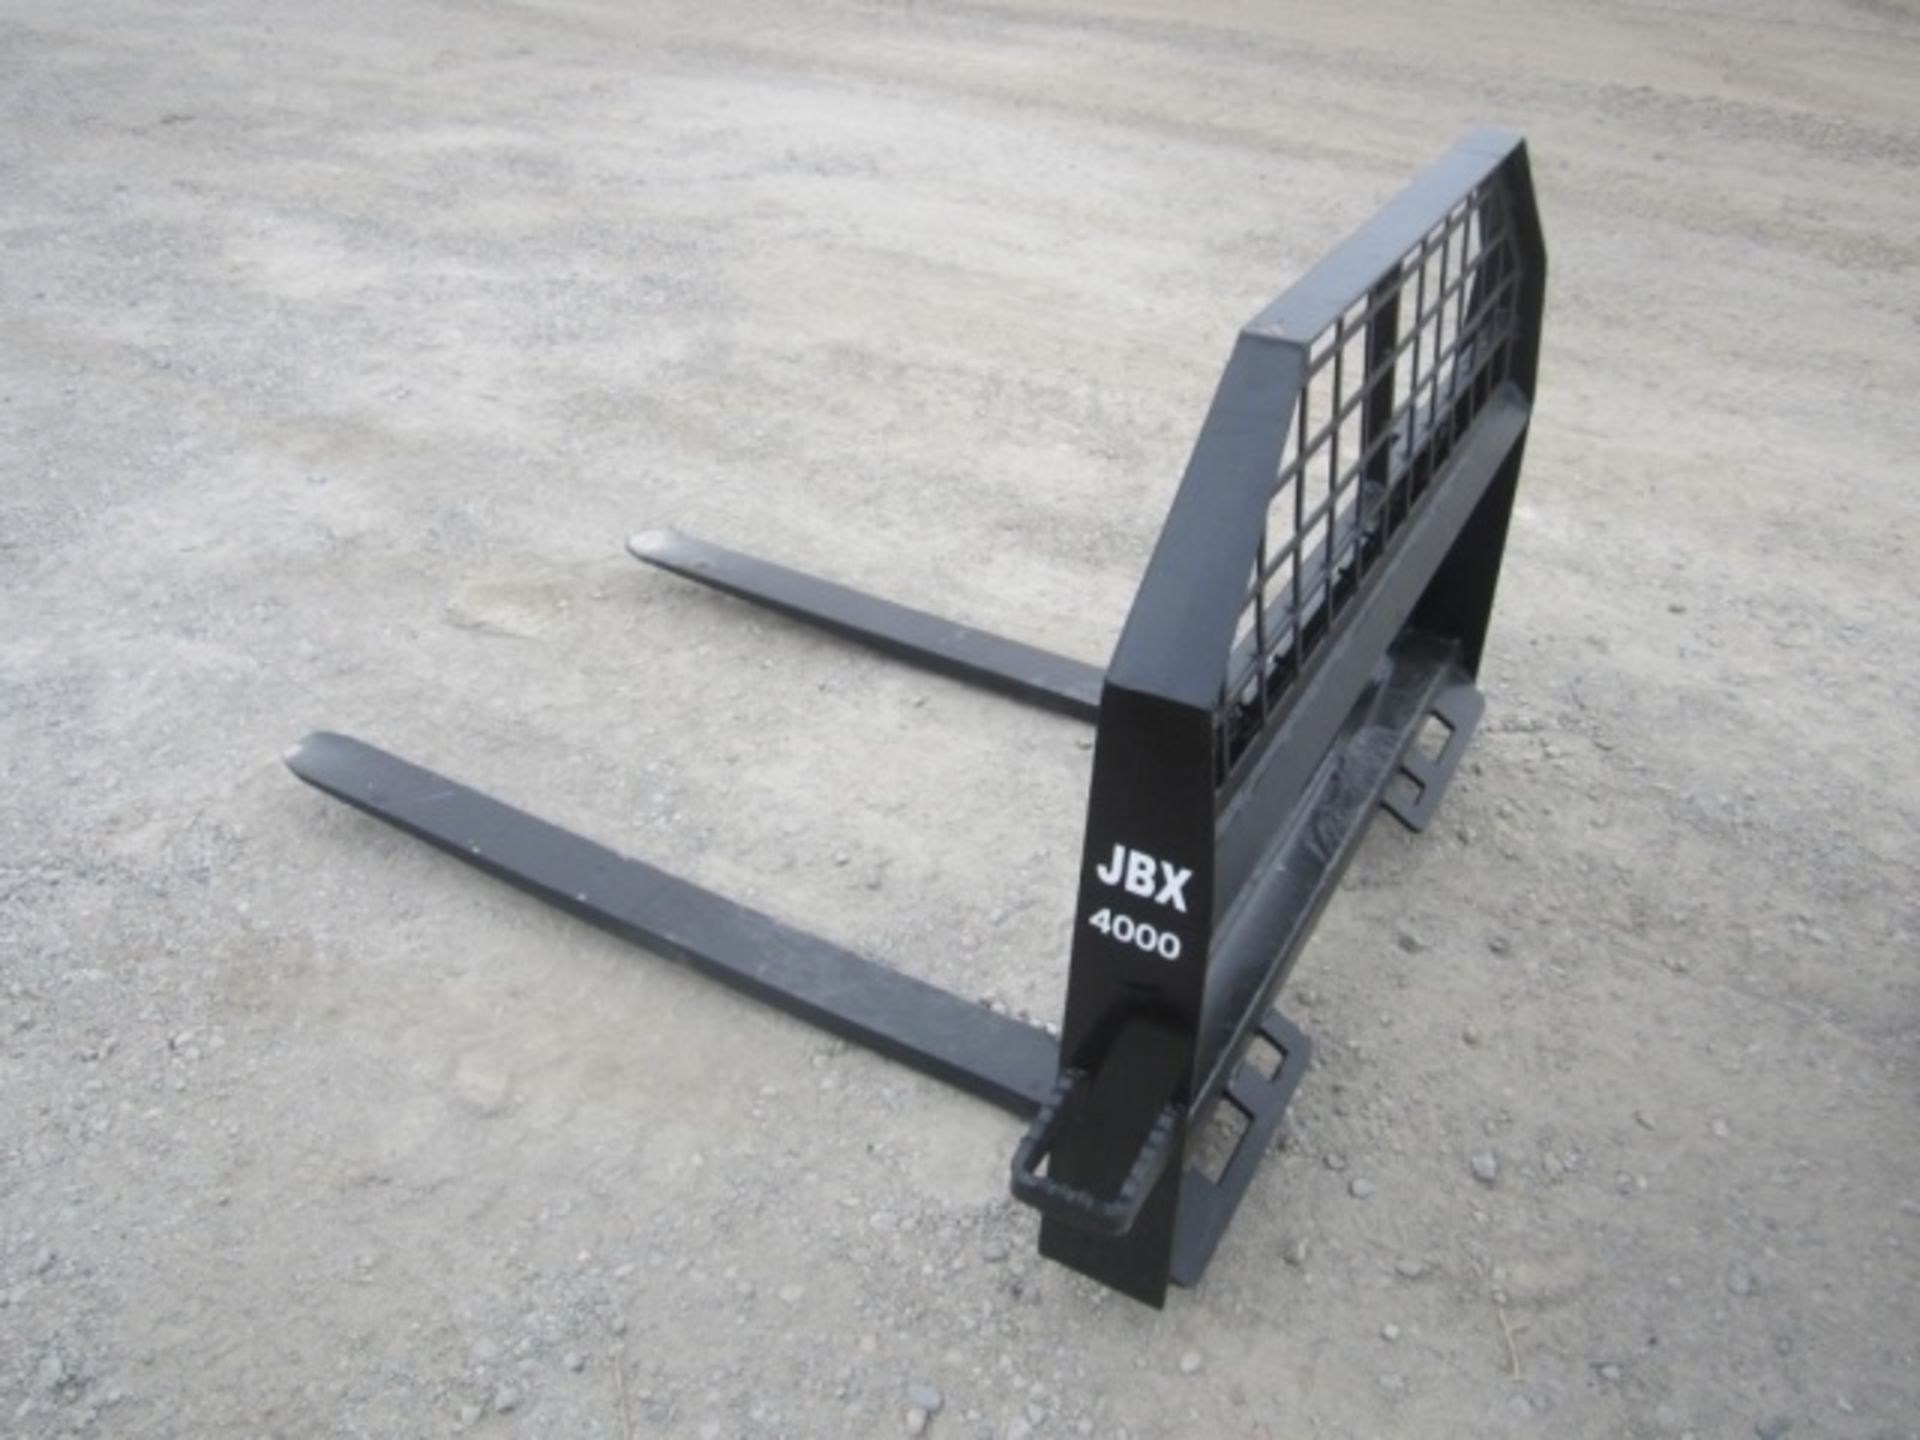 Unused JBX 4000 48" Fork Attachment, Fits Skid Steers - Image 6 of 15